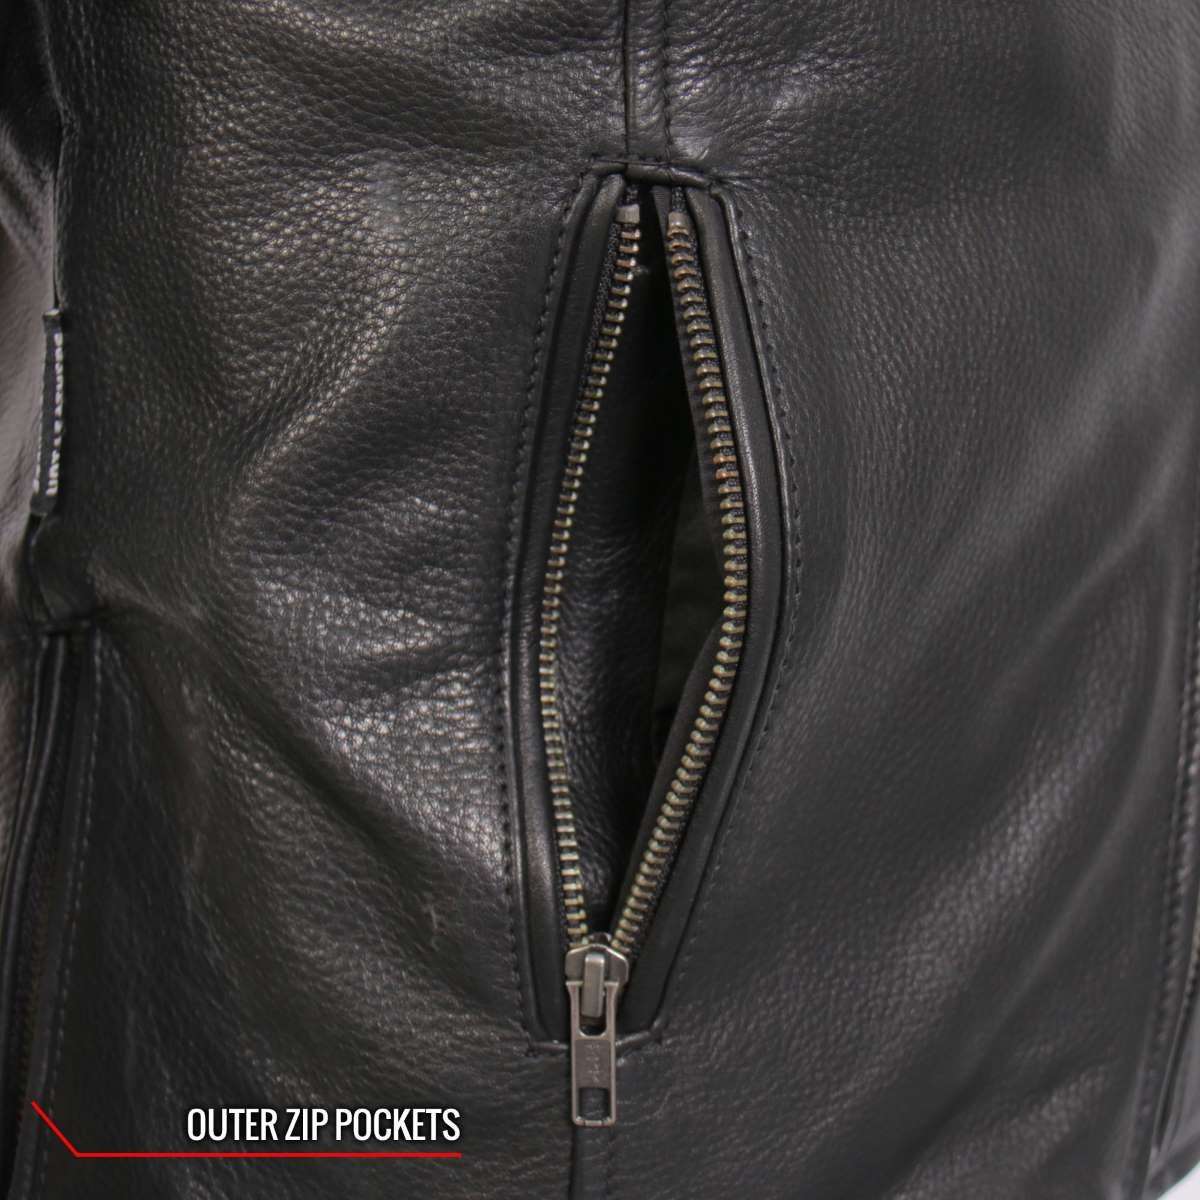 Hot Leathers JKL1034 Ladies Black Leather MC Jacket with Plaid Flannel Lining